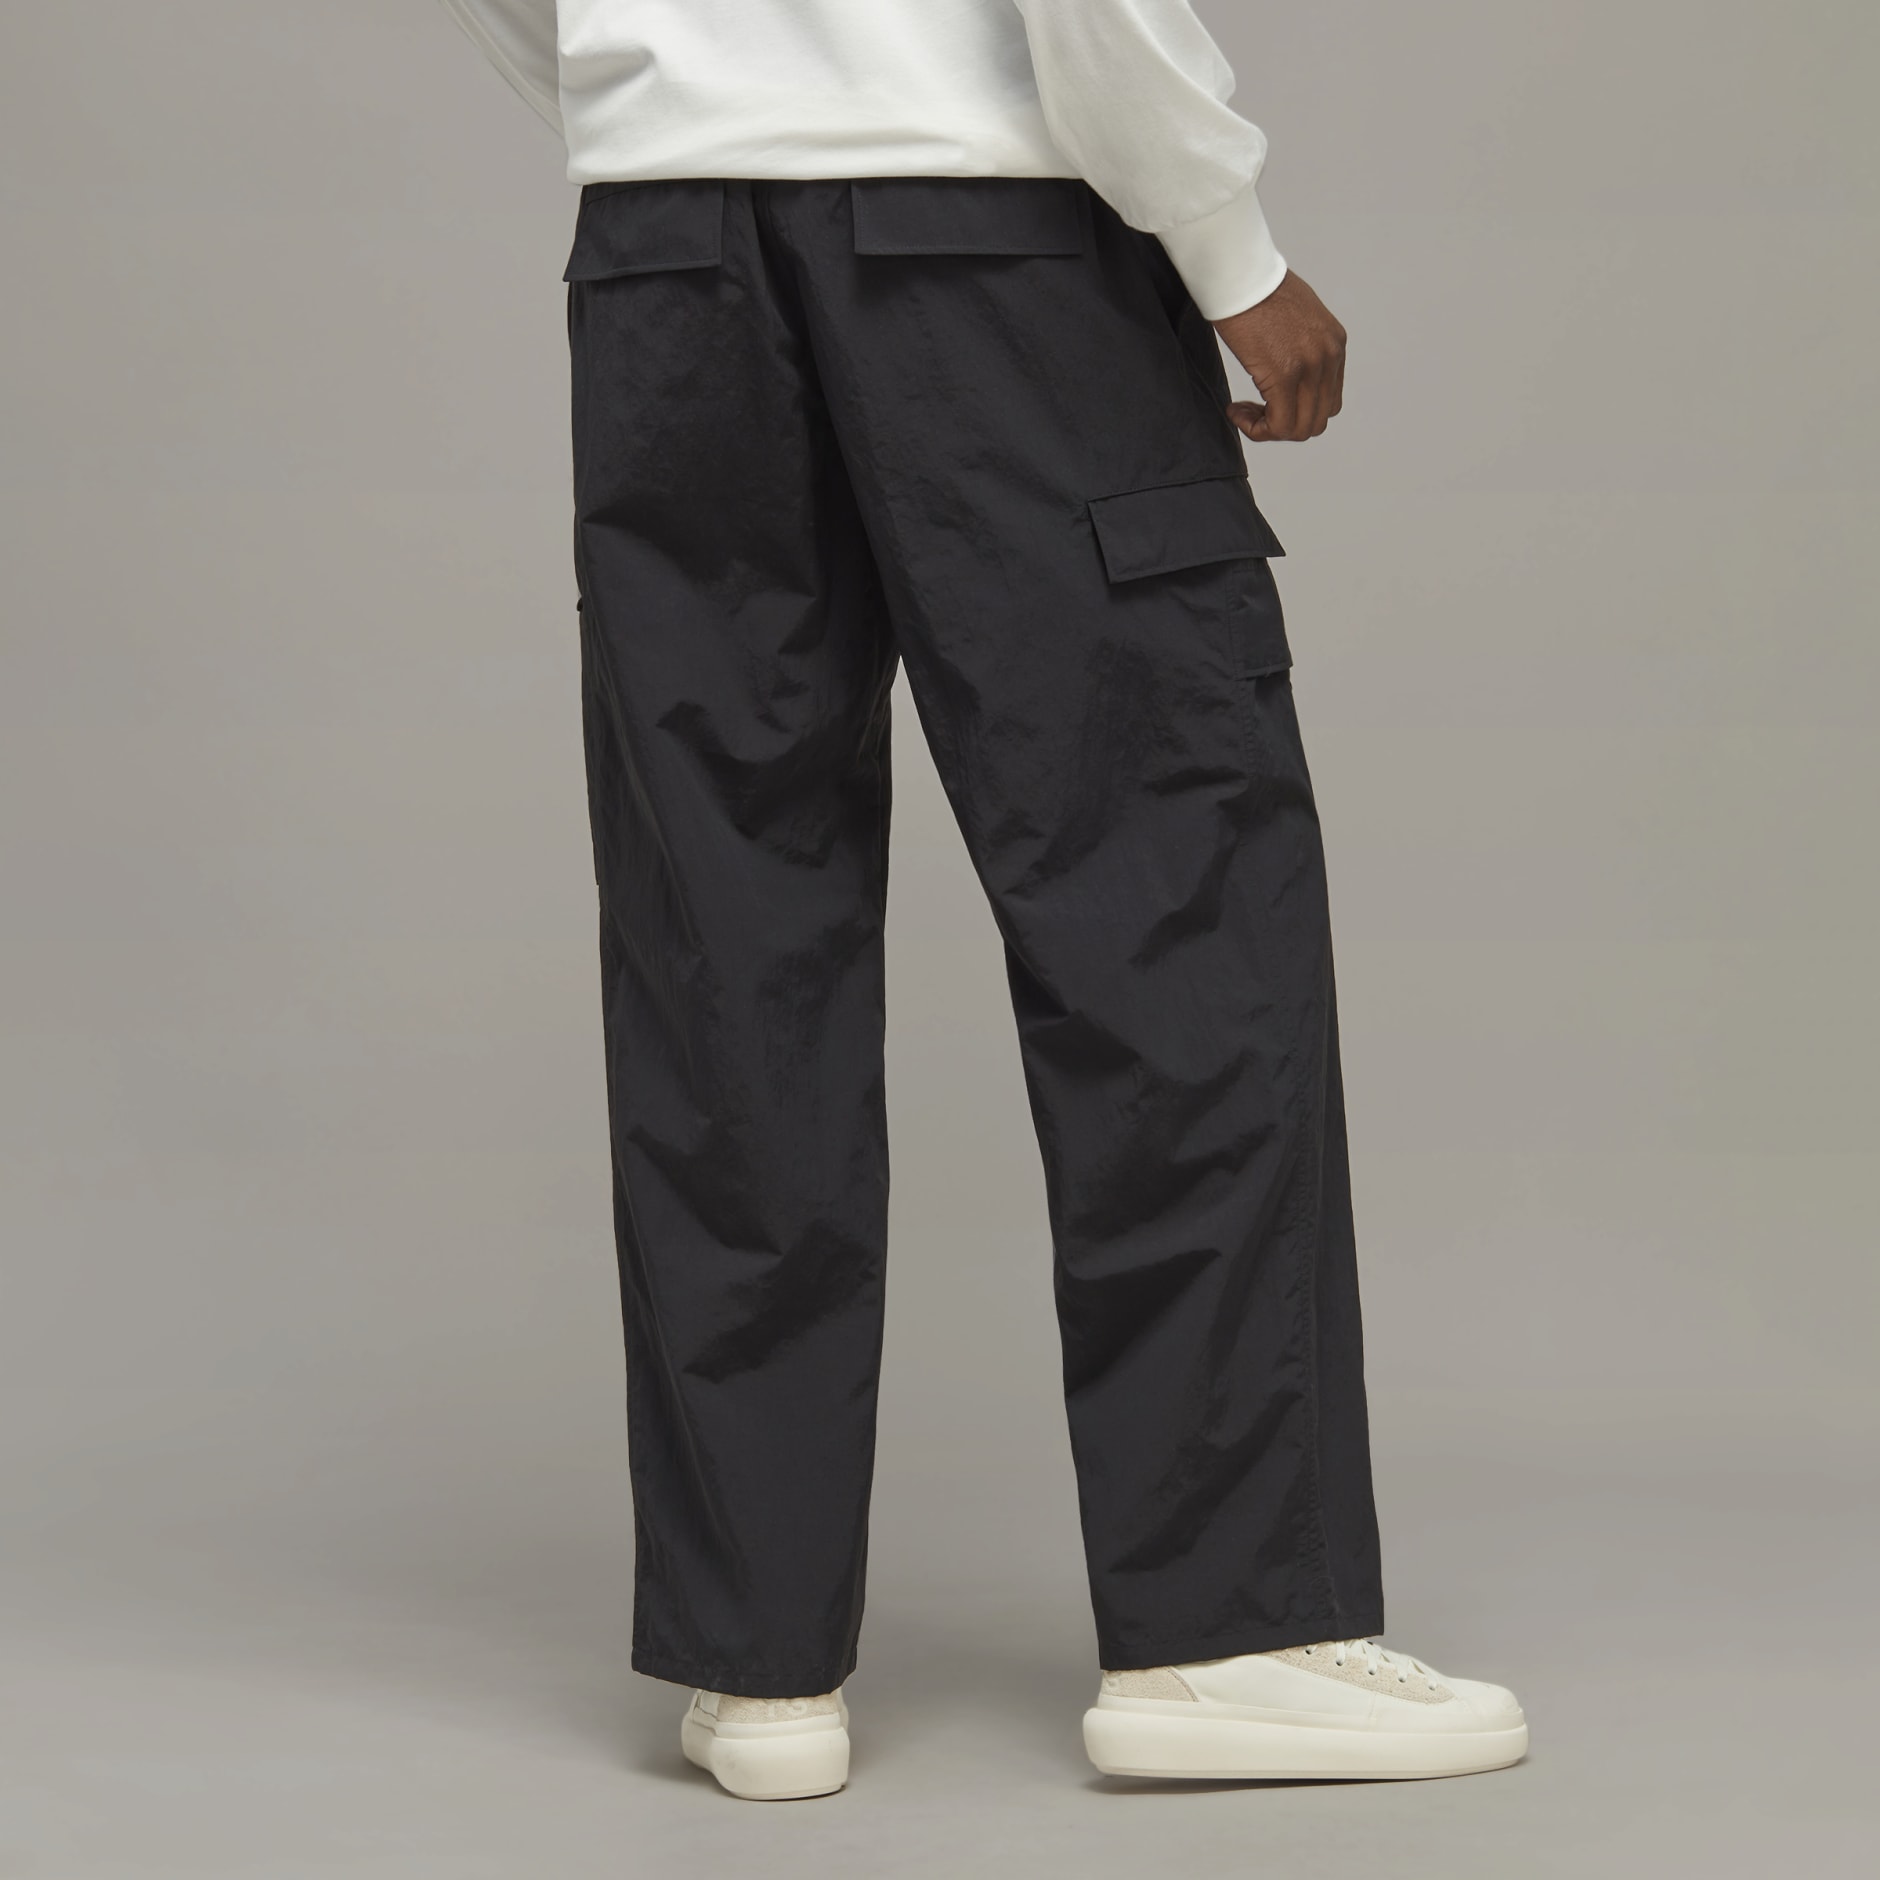 Clothing - Y-3 Crinkle Nylon Pants - Black | adidas South Africa